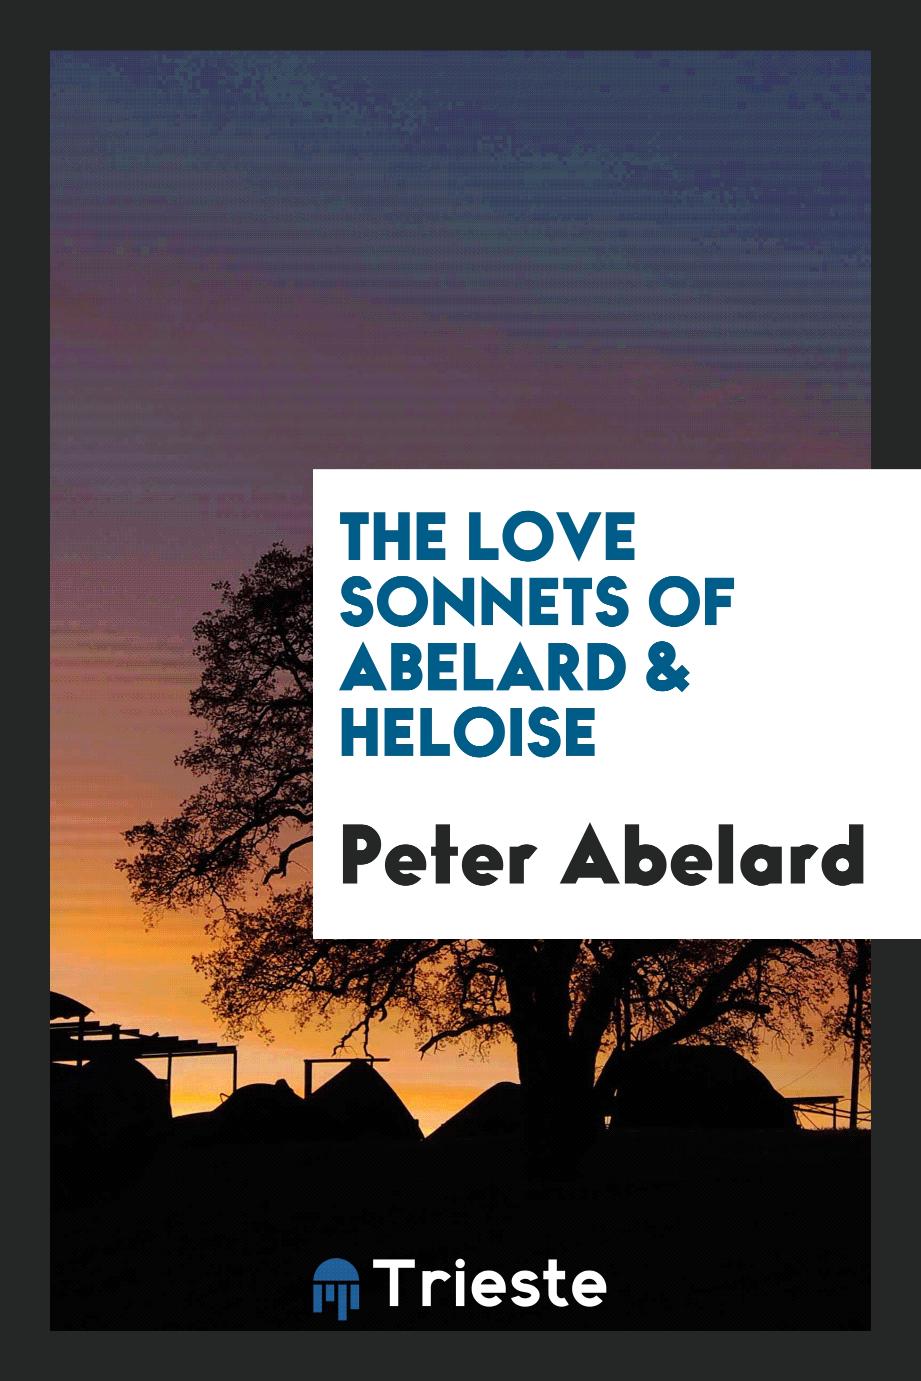 The Love sonnets of Abelard & Heloise